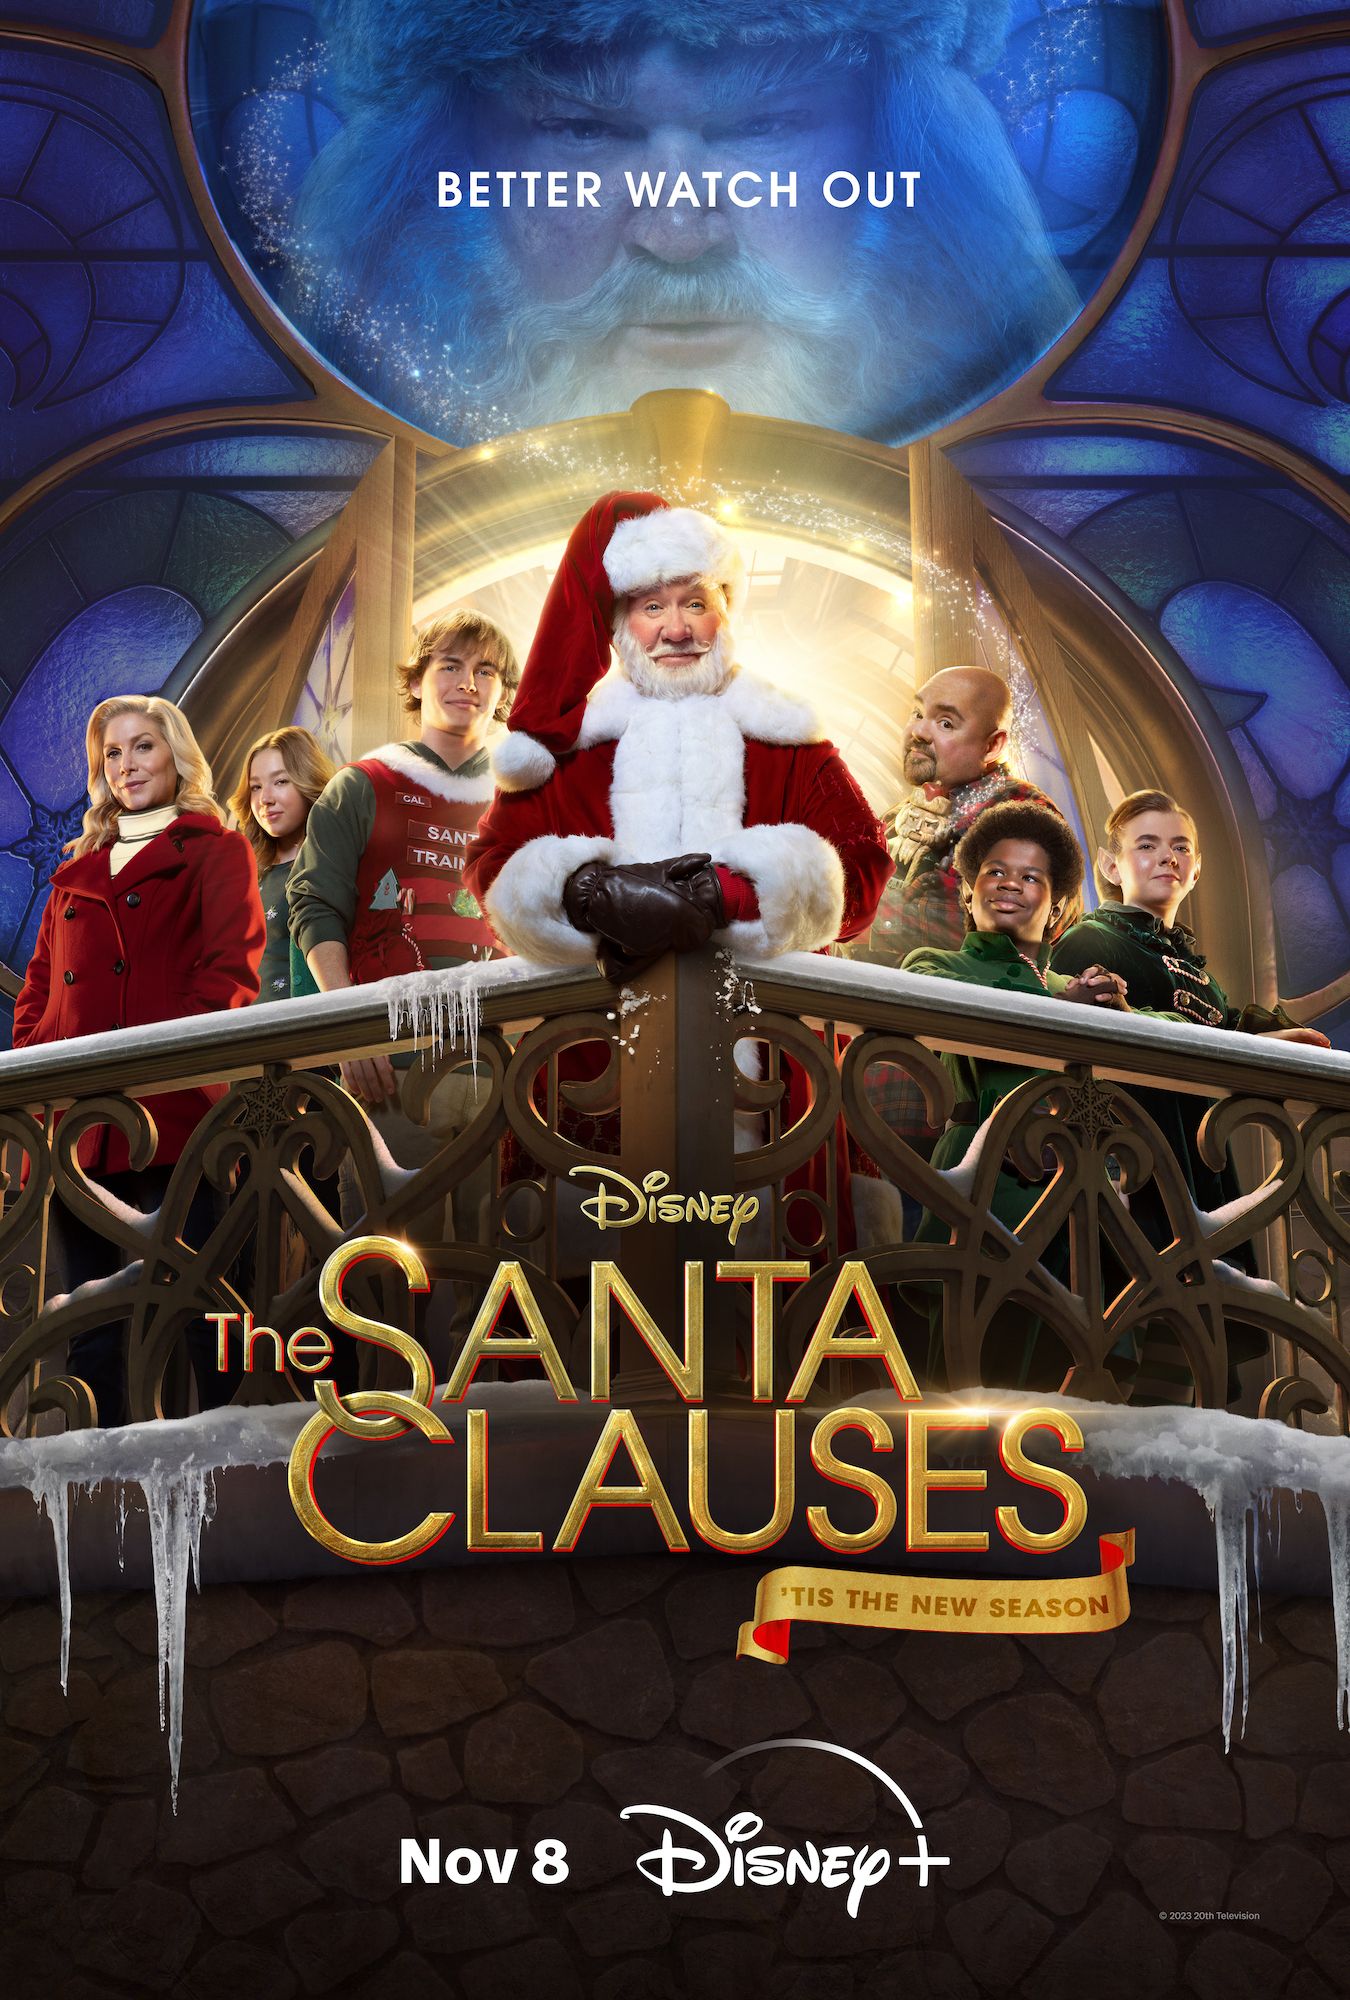 The Santa Clauses Season 2 Featurette Showcases Eric Stonestreet As The Mad Santa [EXCLUSIVE]